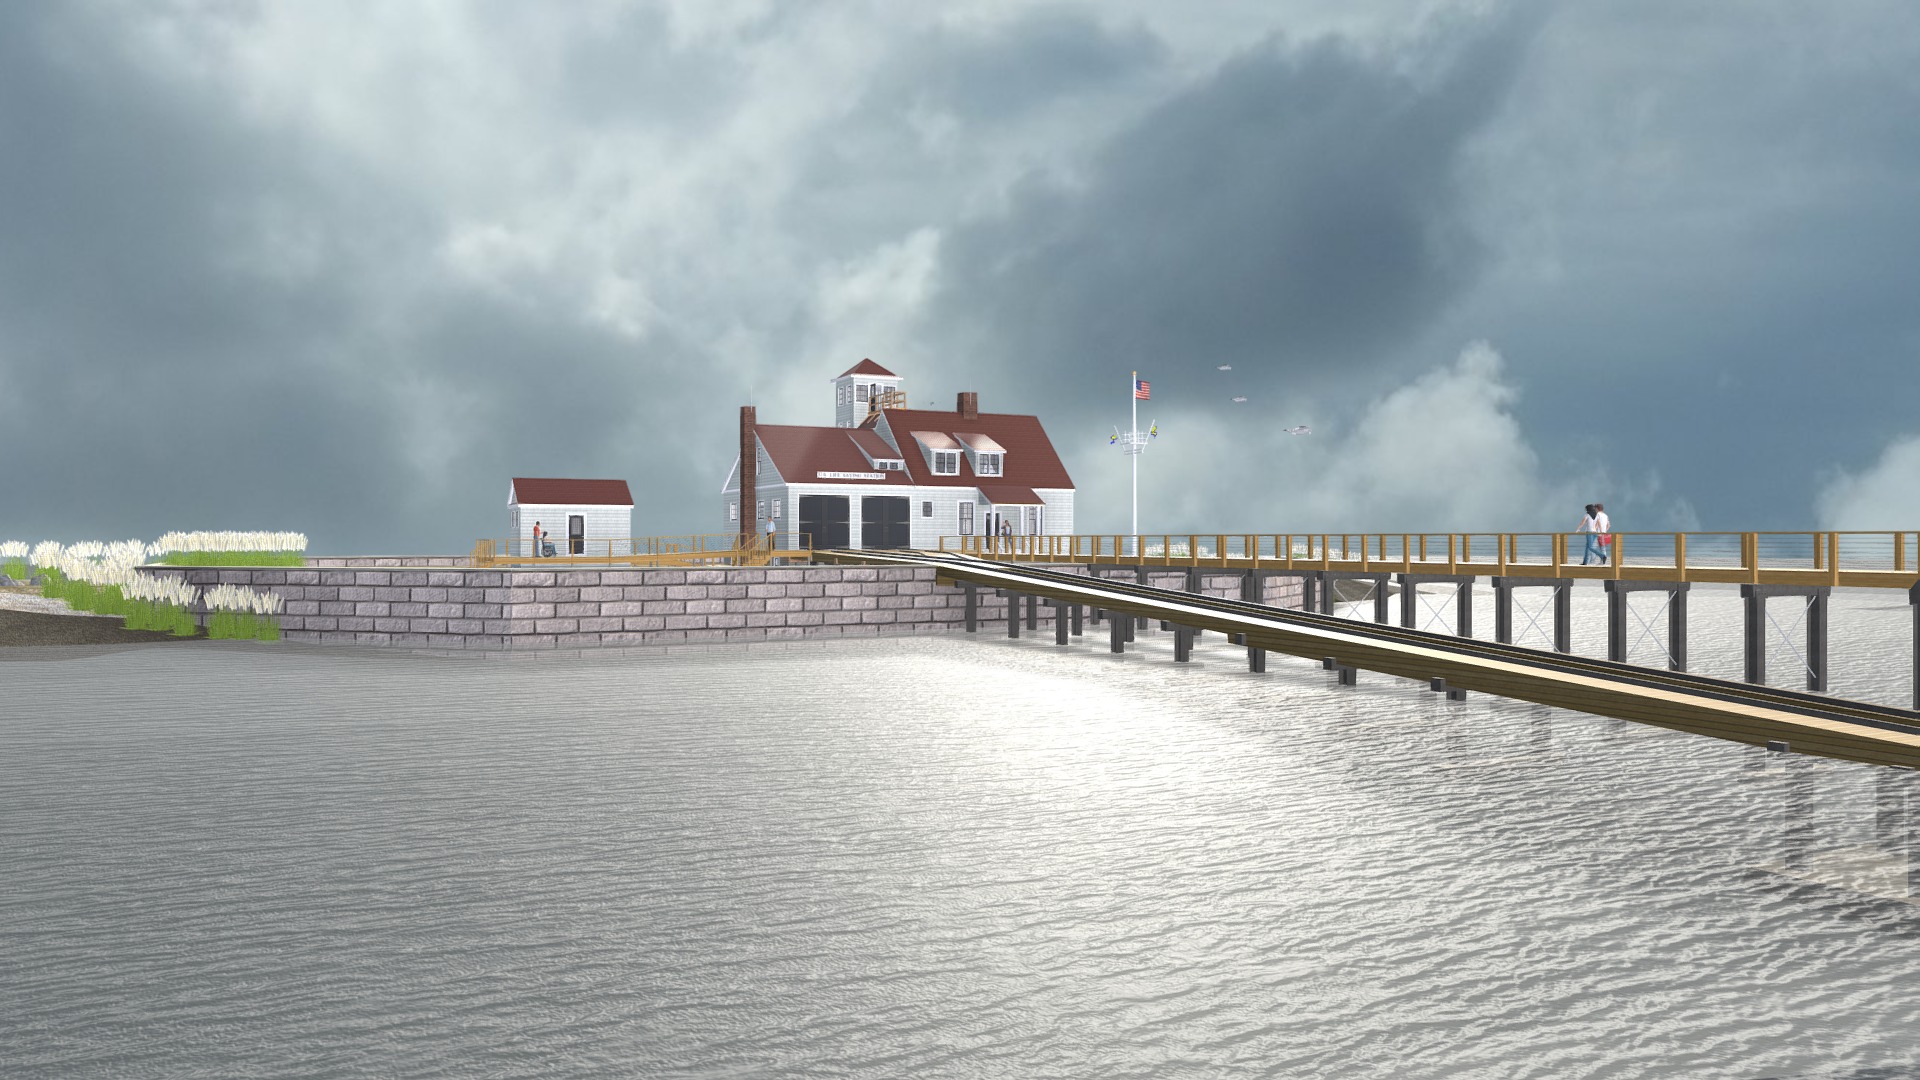 3D model U.S. Life Saving Station – Wood Island - This is a 3D model of the U.S. Life Saving Station - Wood Island. The 3D model is about a building on a dock over water.